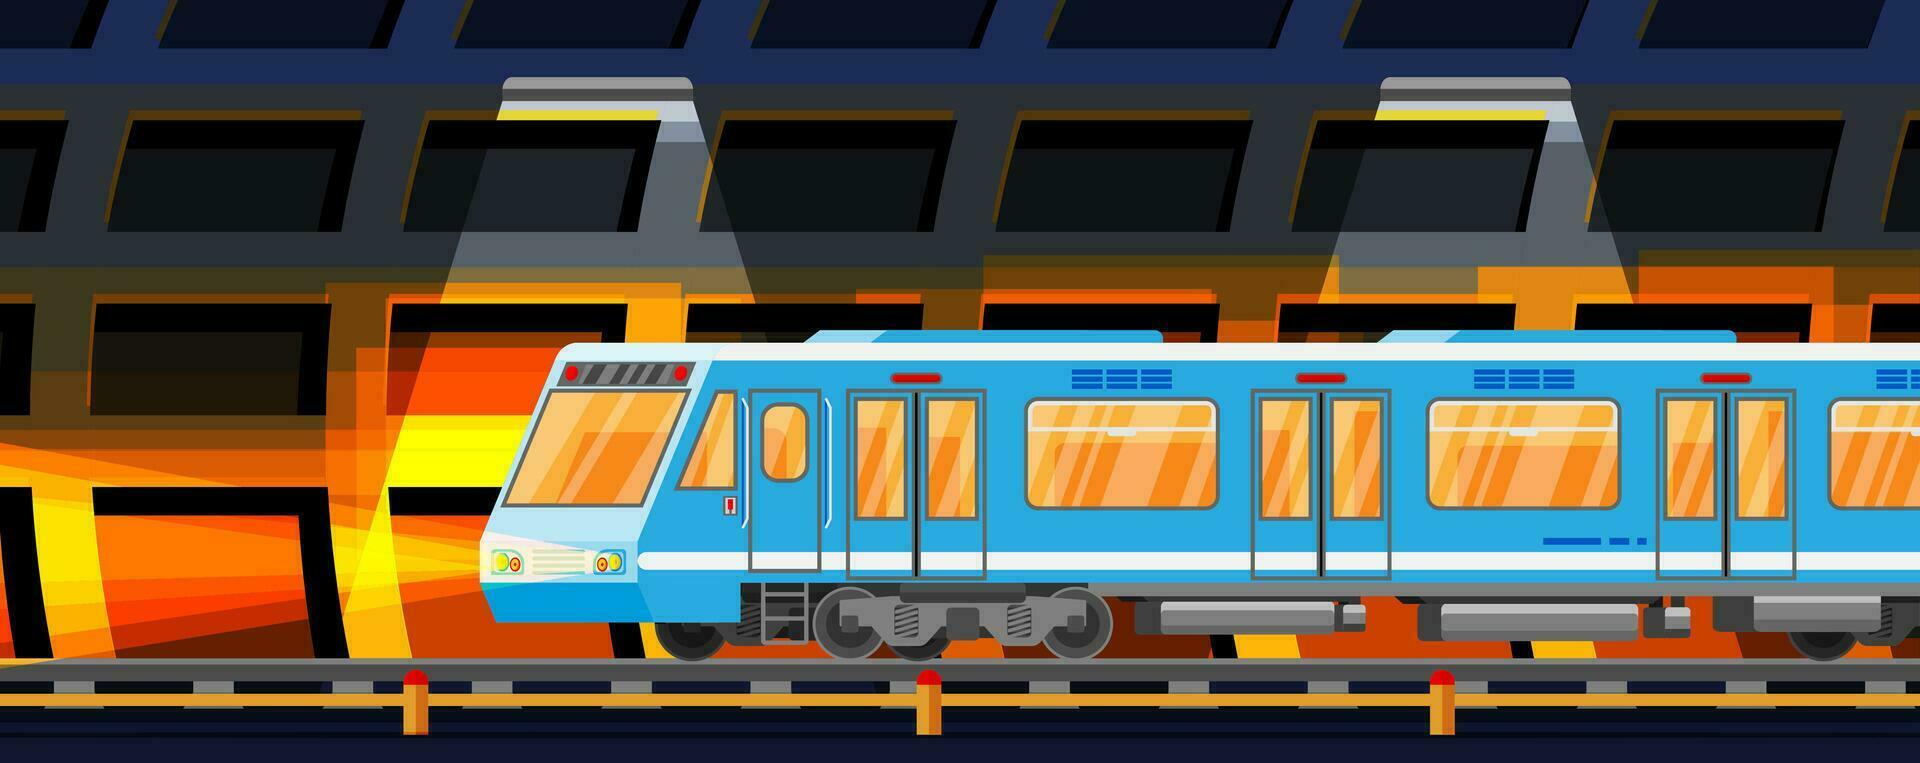 Detailed Underground Train Car in Tunnel. Subway Railway Car with Lights. Modern Urban Metro. Passenger Express Railway. Railroad Public Transportation. Rapid Transport. Flat Vector Illustration